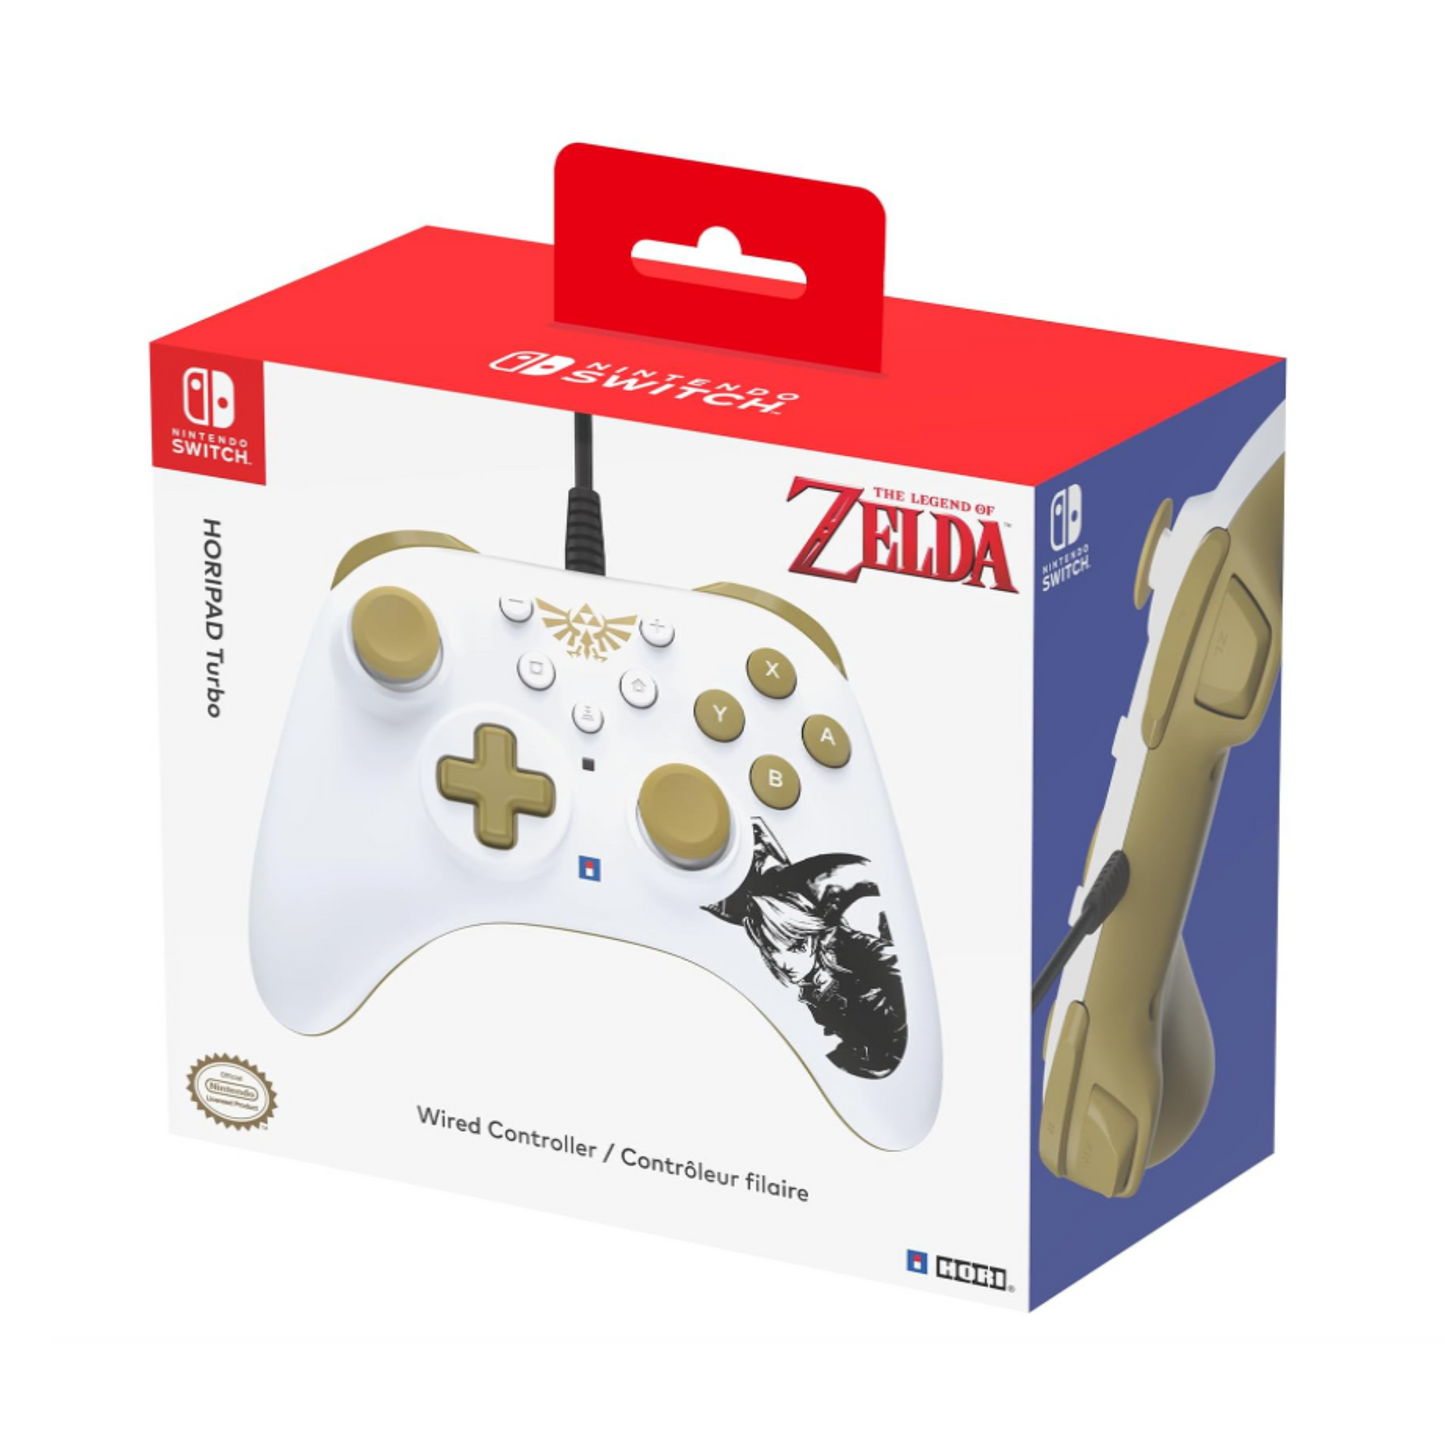 Hori Horipad turbo wired Controller for Nintendo Switch - Zelda